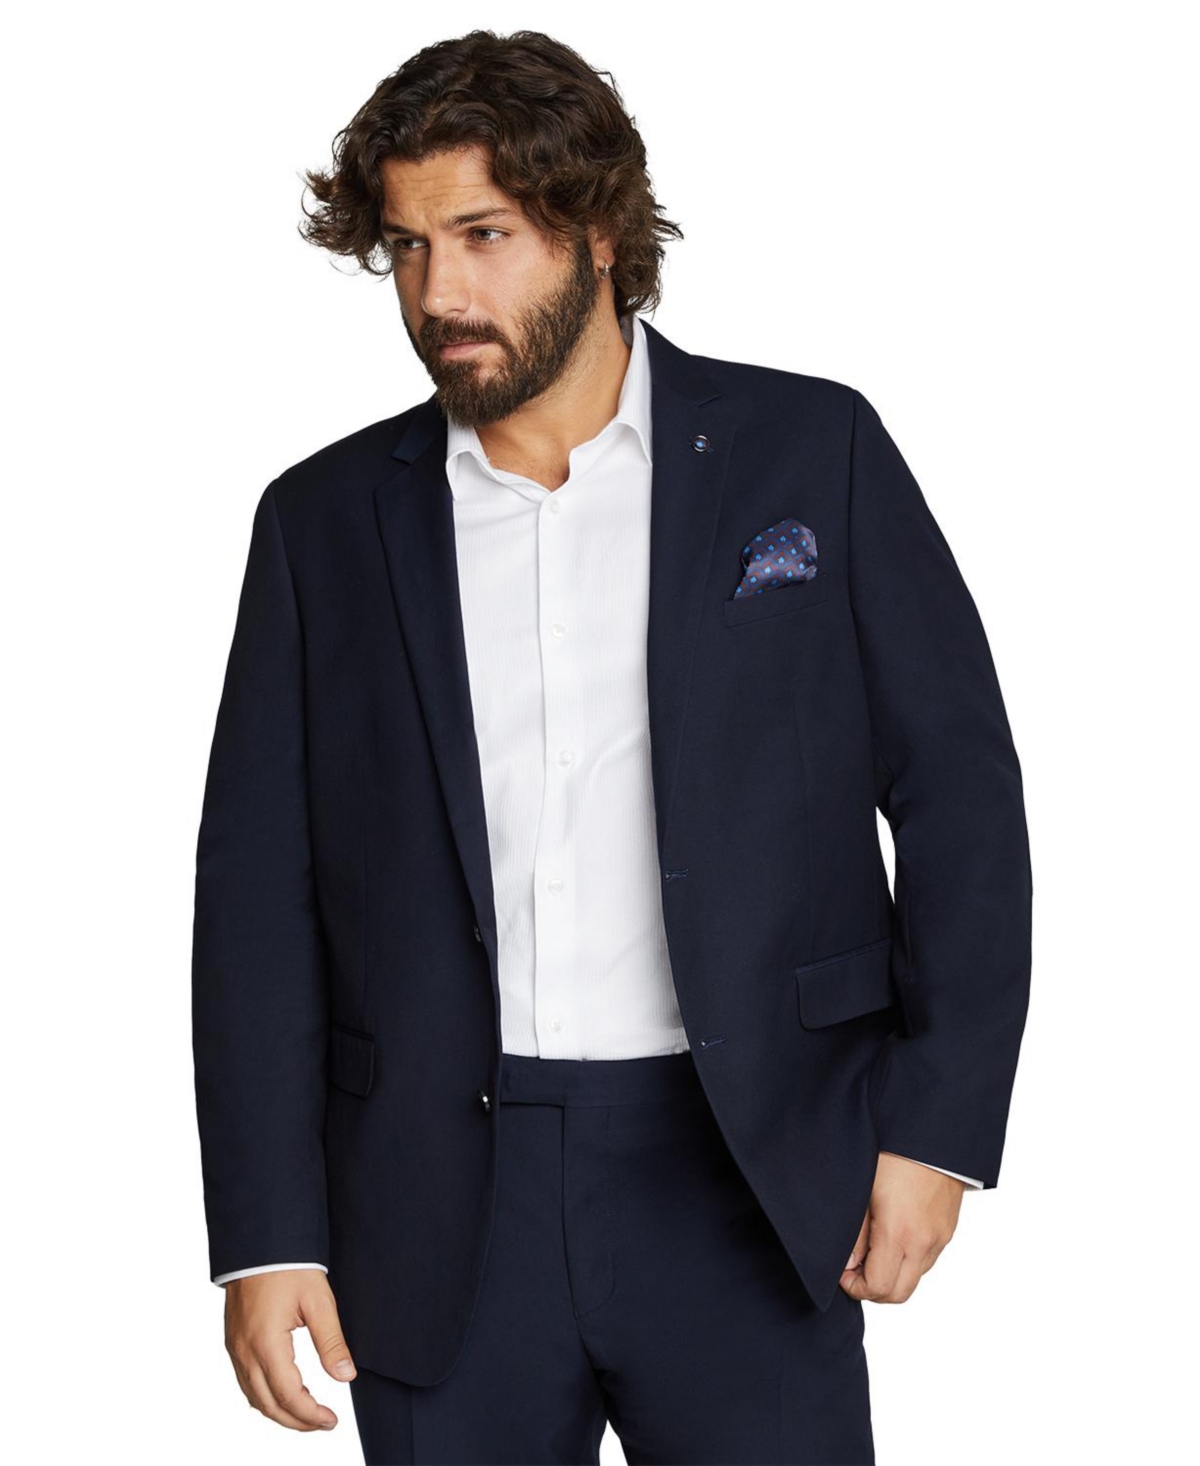 Men's Johnny g Raymond 2 Button Suit Jacket - Navy